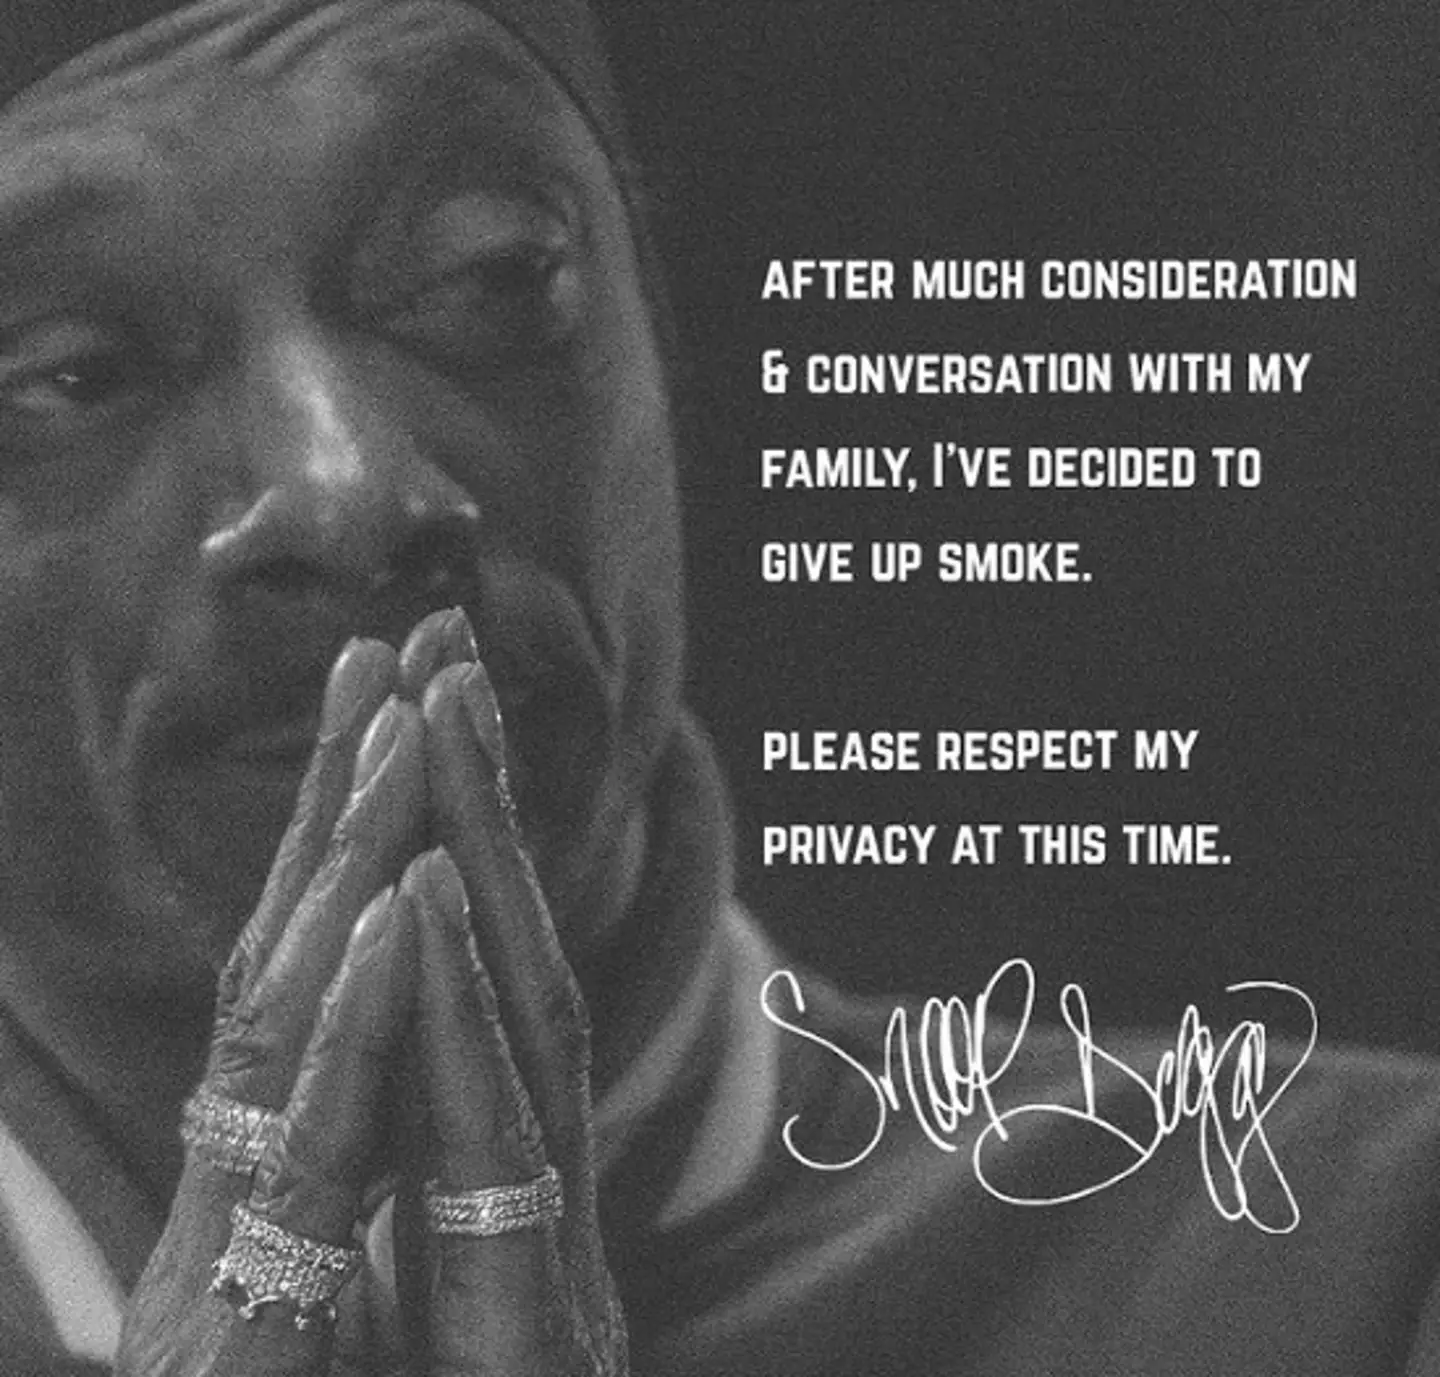 Snoop shared a statement to Instagram.